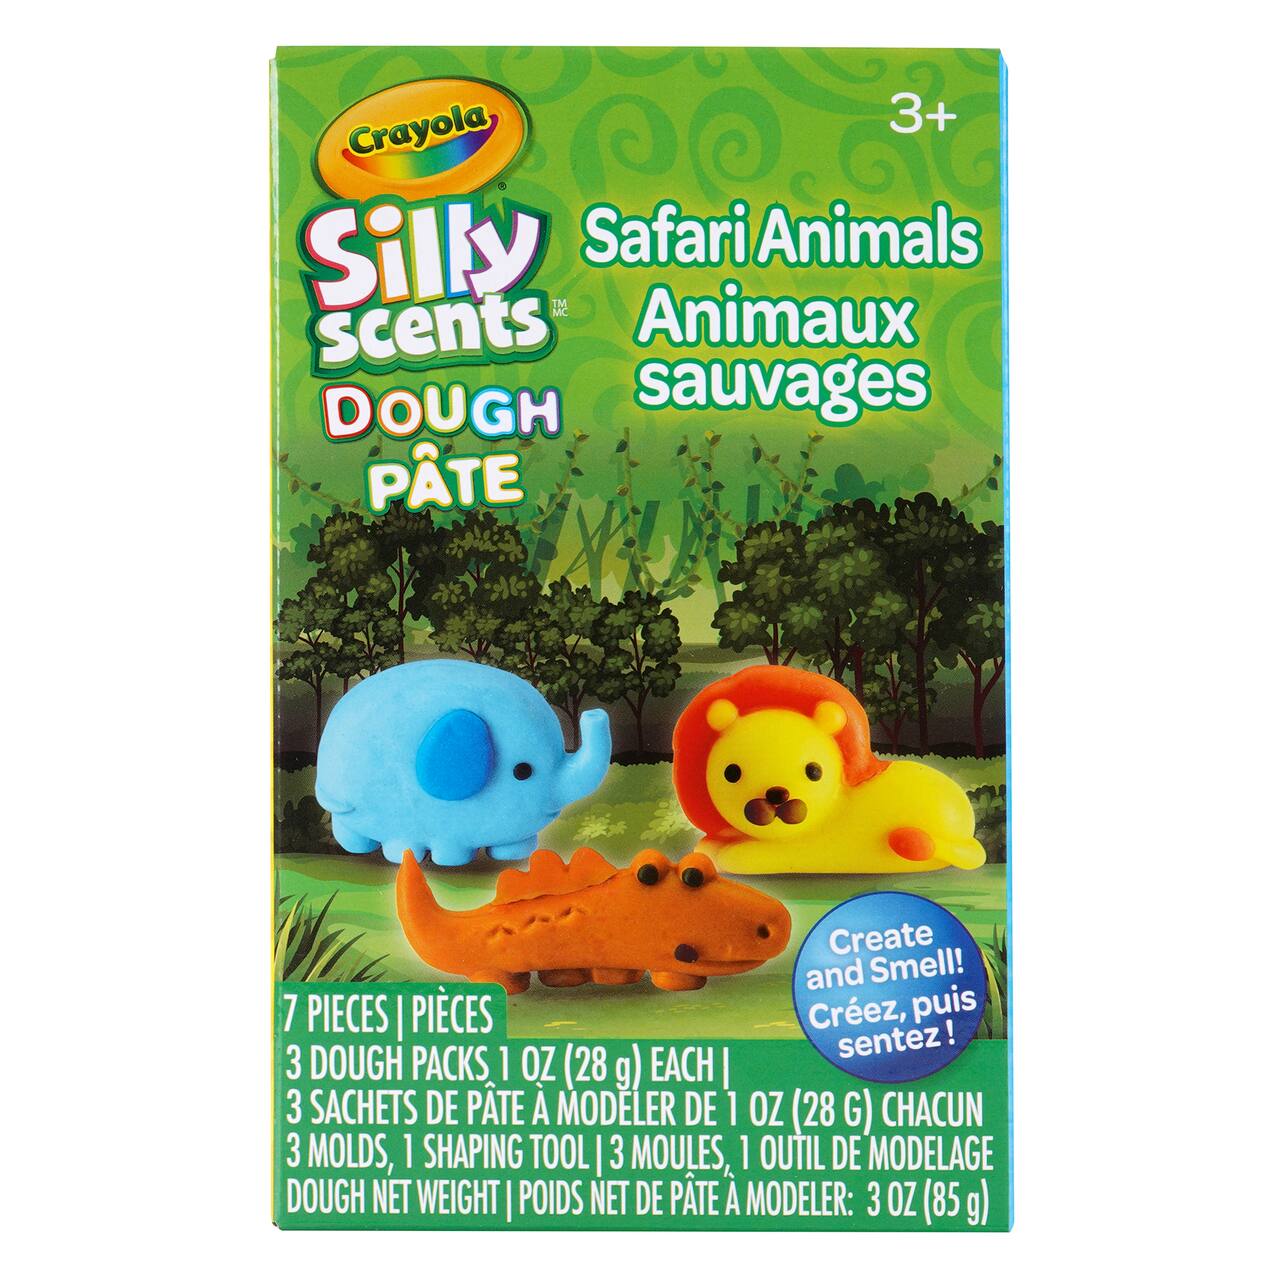 Crayola&#xAE; Silly Scents&#x2122; Dough Safari Animals Playset